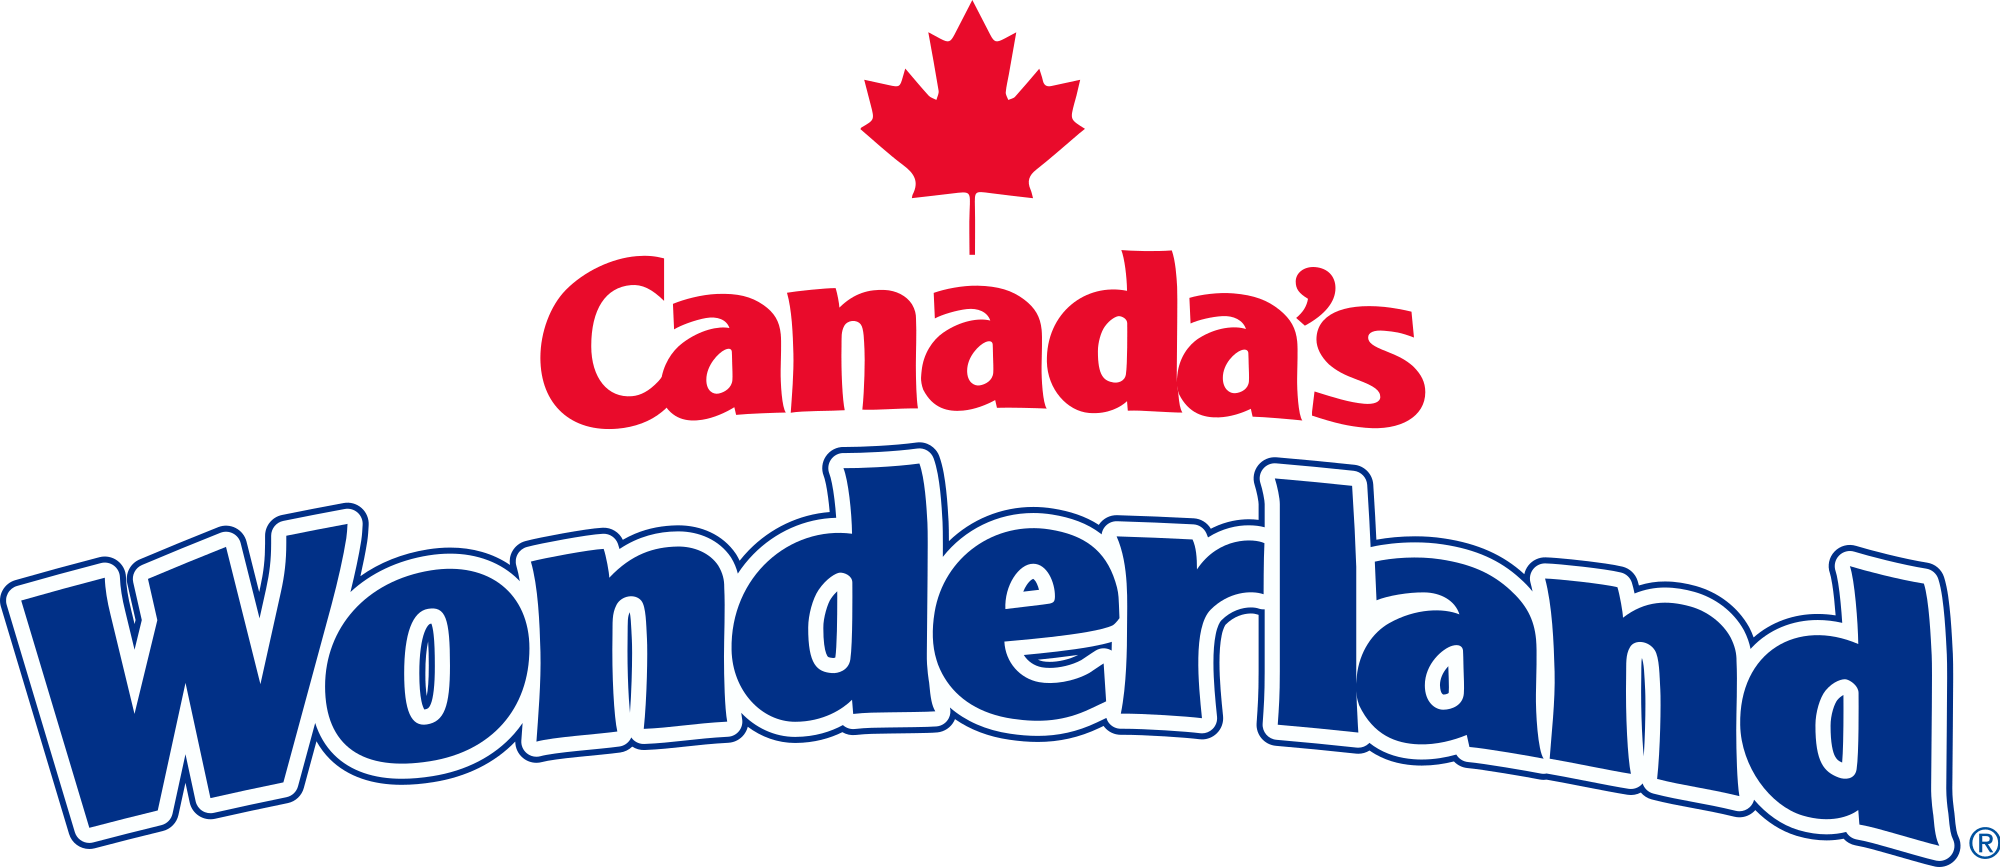 Canada's Logo - Canada's Wonderland logo.svg